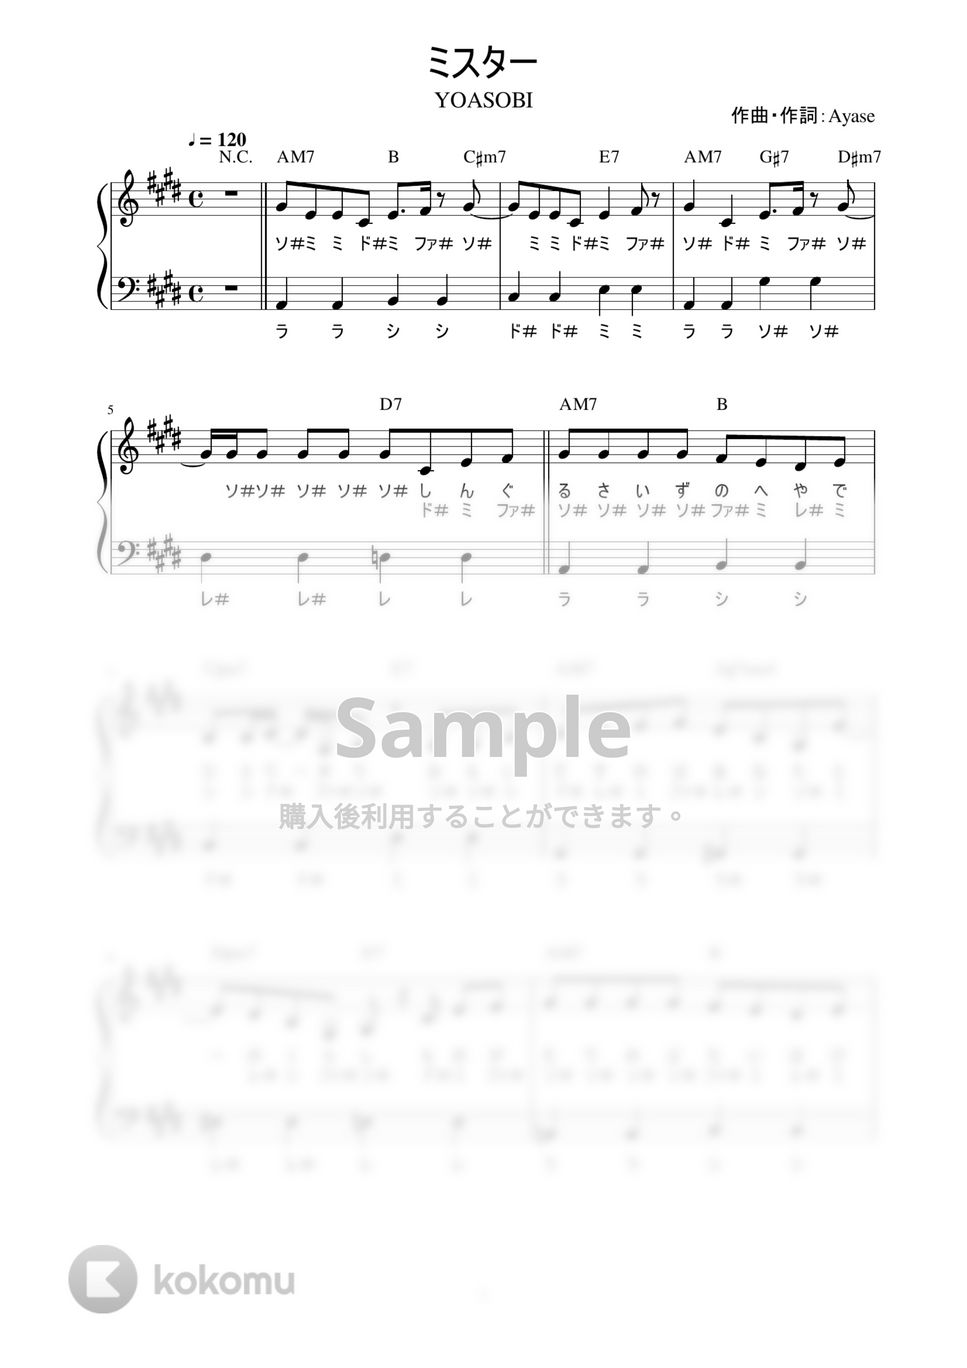 YOASOBI - ミスター (かんたん / 歌詞付き / ドレミ付き / 初心者) by piano.tokyo